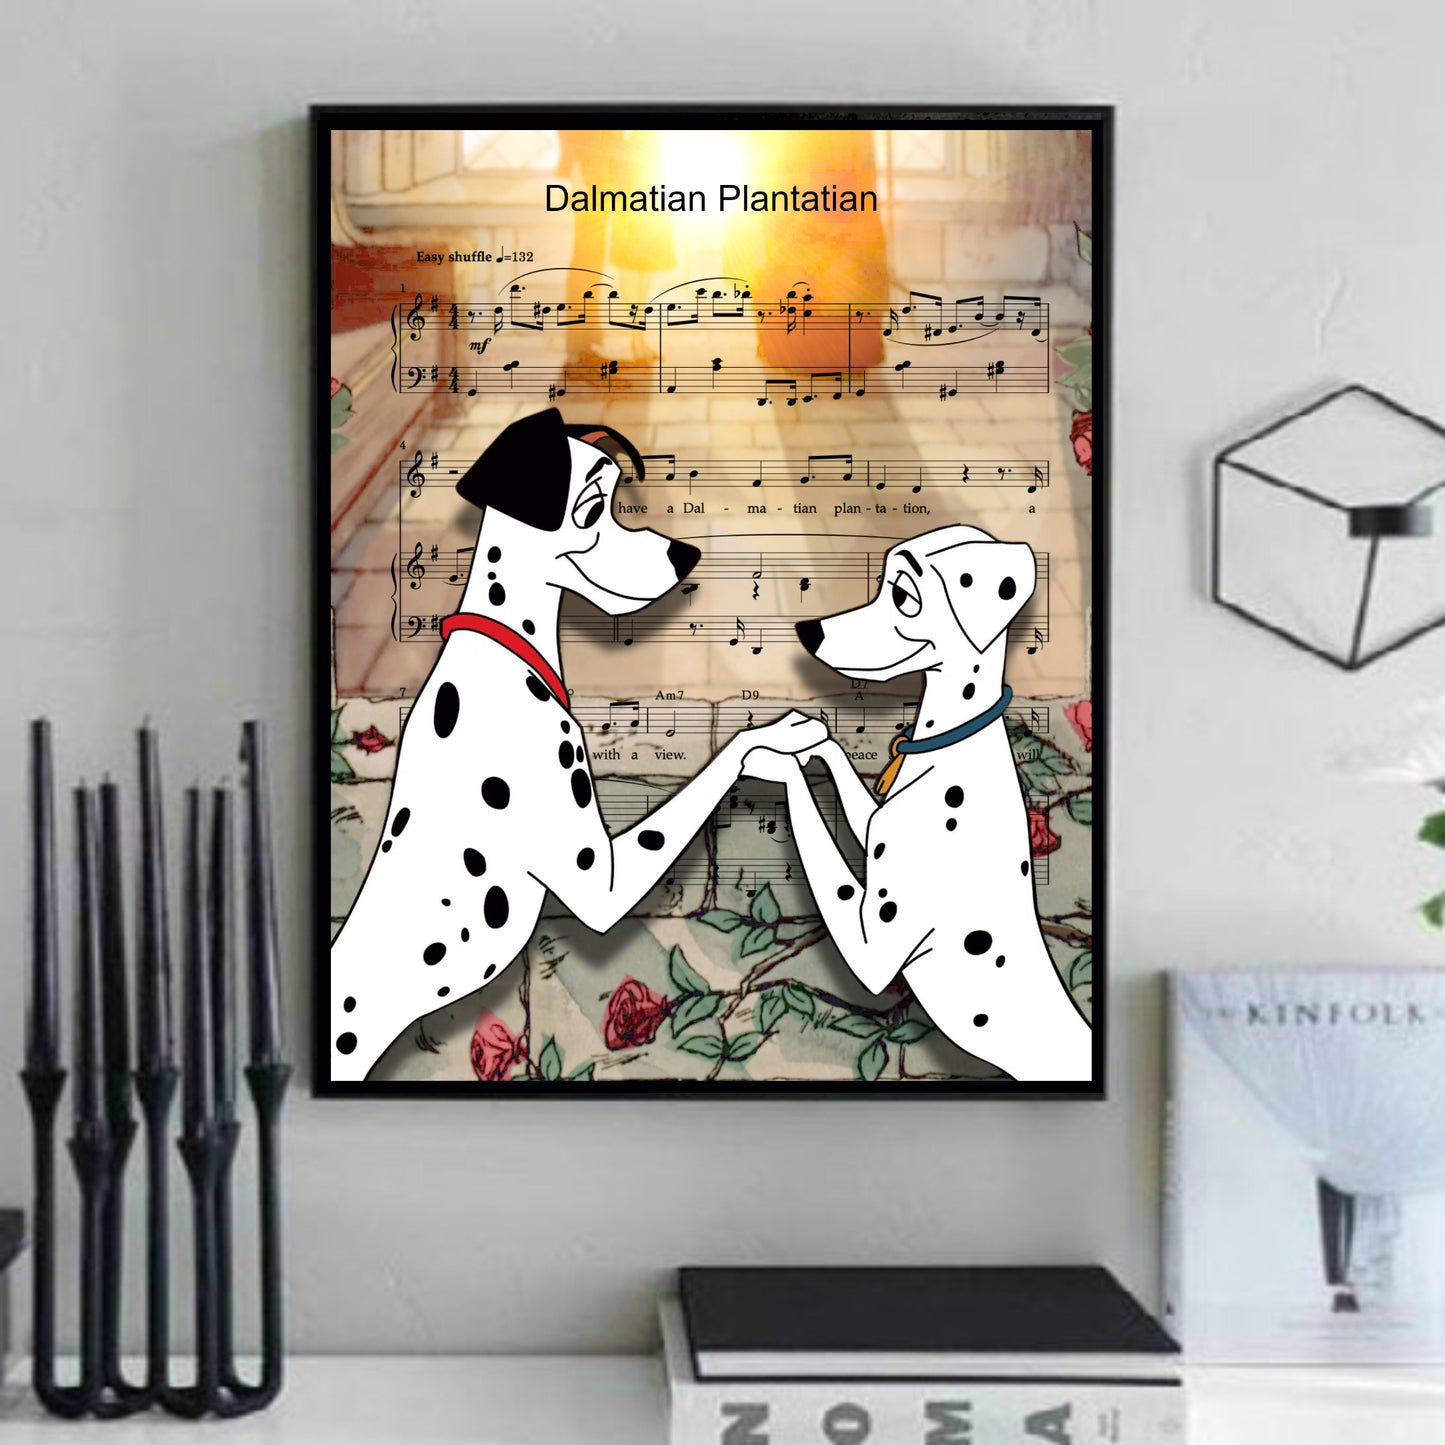 101 Dalmatians Dalmatian Plantation Sheet Music Wall Art Print